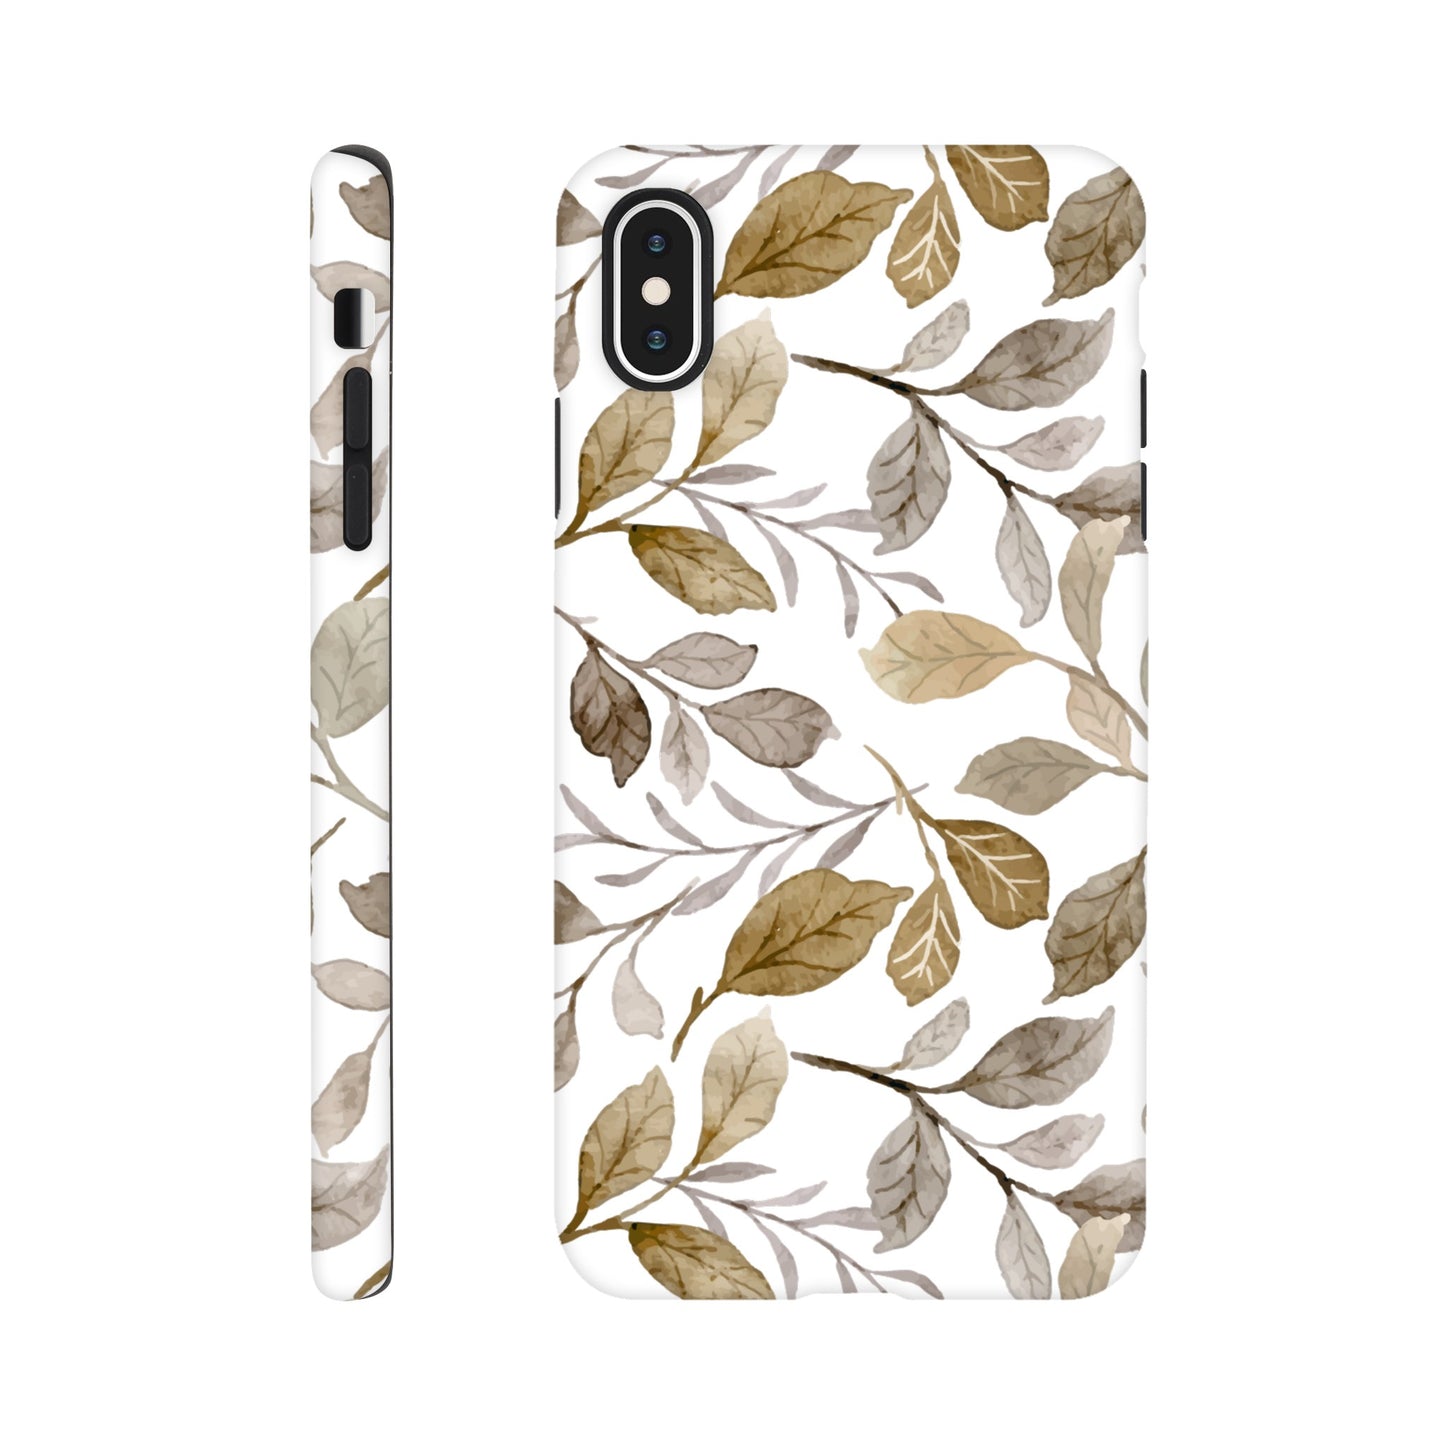 Autumn Leaves - Phone Tough Case iPhone XS Max Phone Case Plants